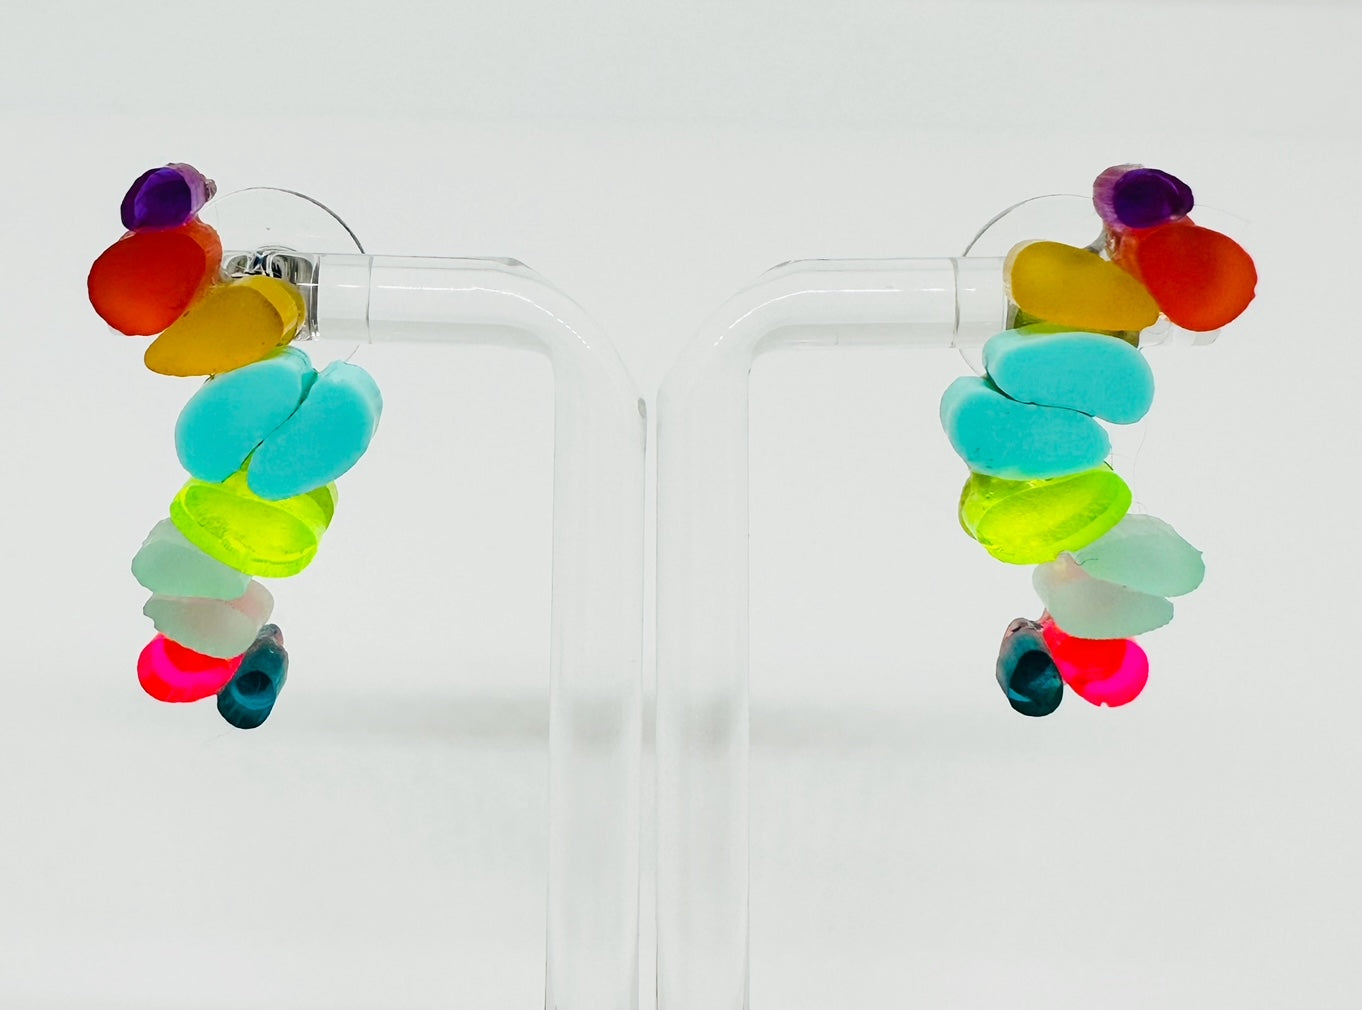 Acrylic ‘Drop Stud’ earrings in bright colors.  